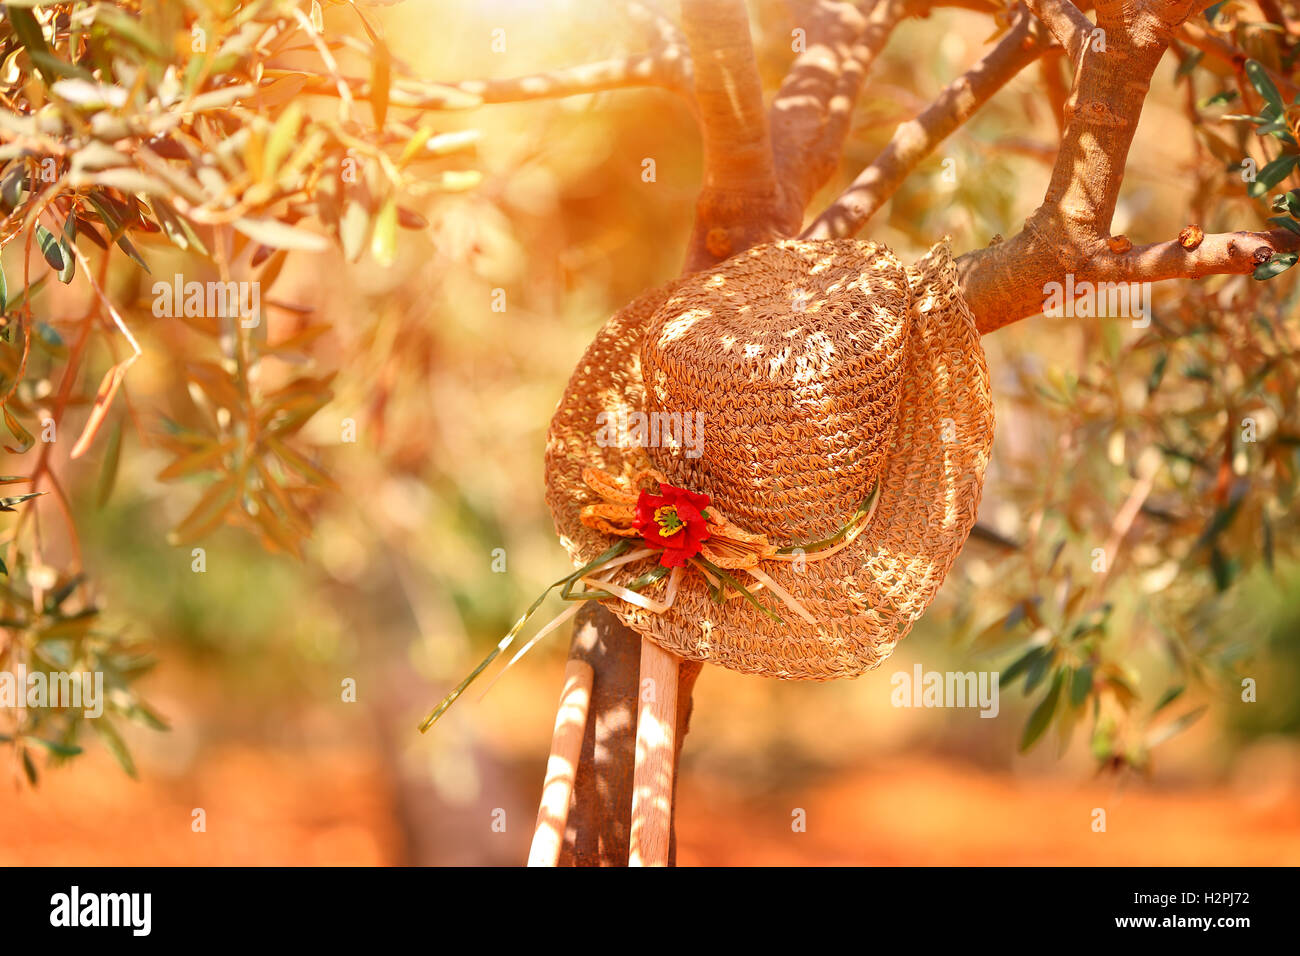 Womens straw hat on the olive tree near gardening tools in bright sunset light, autumn harvest season Stock Photo